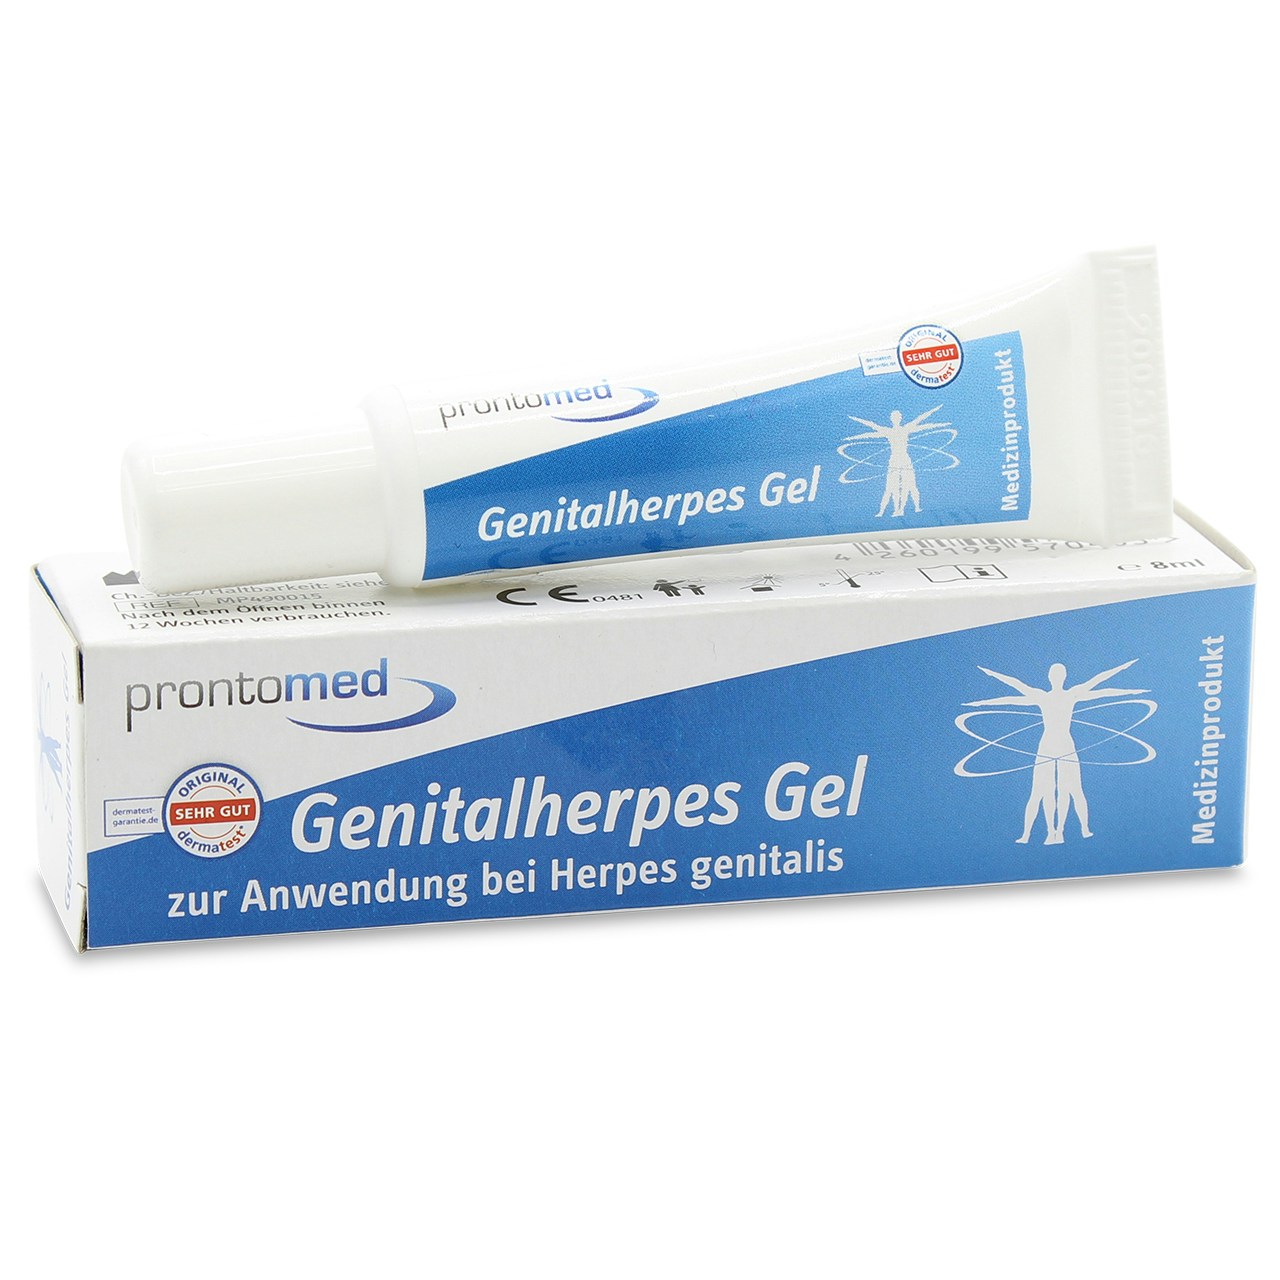 Prontomed Genitalherpes Gel